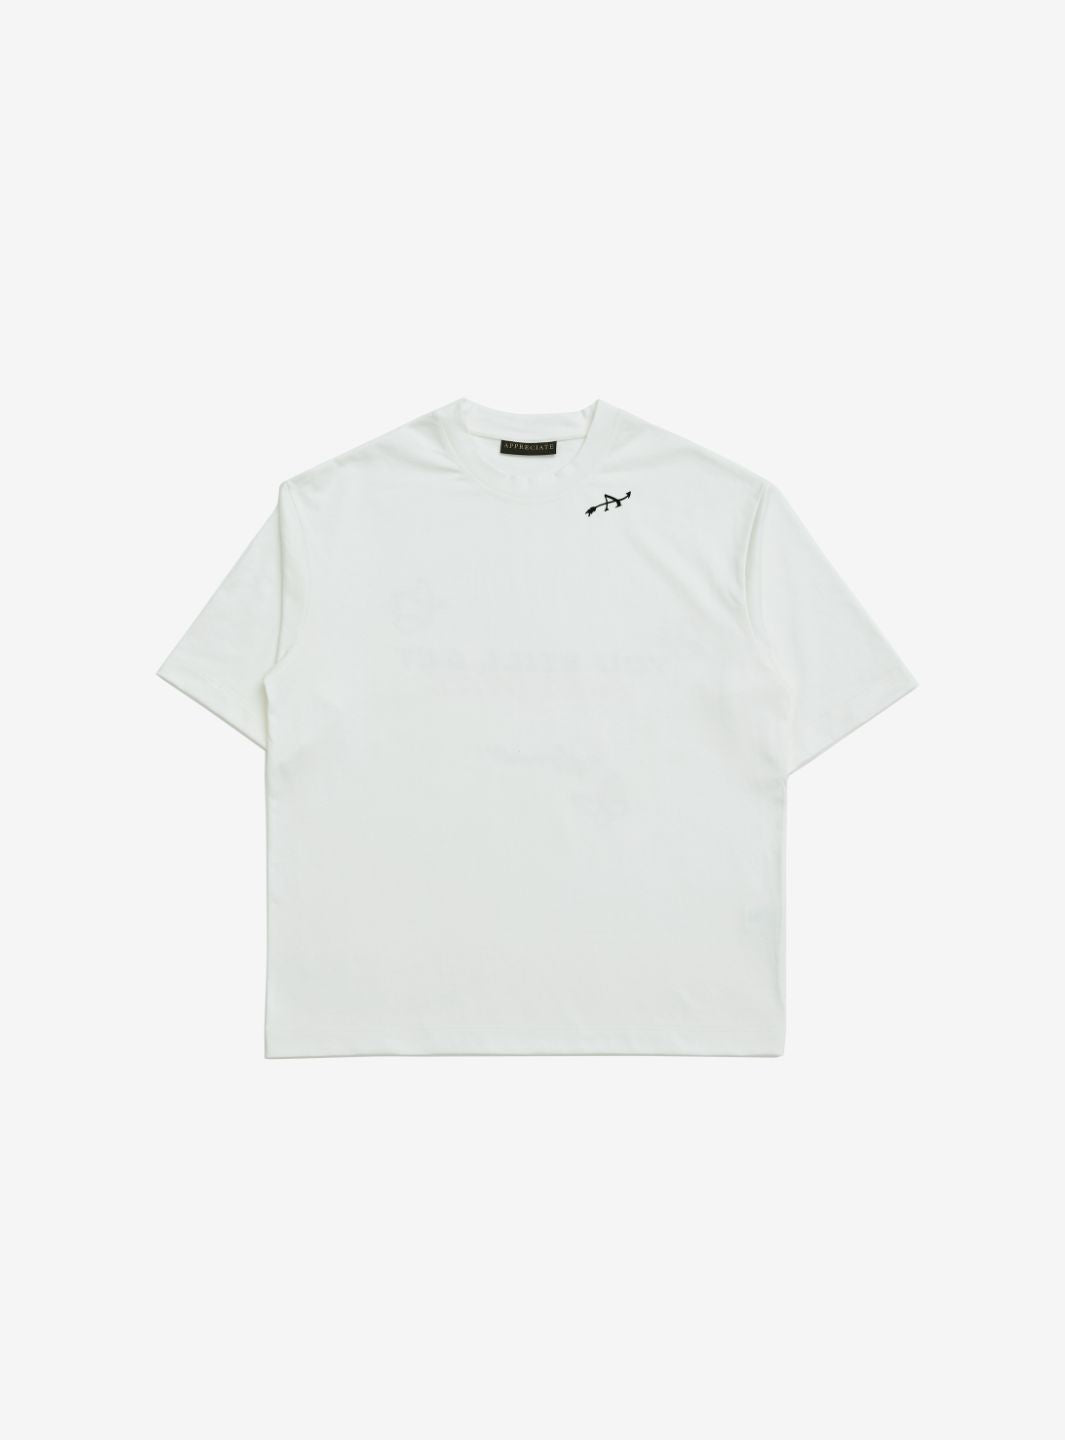 Appreciate T-Shirt White